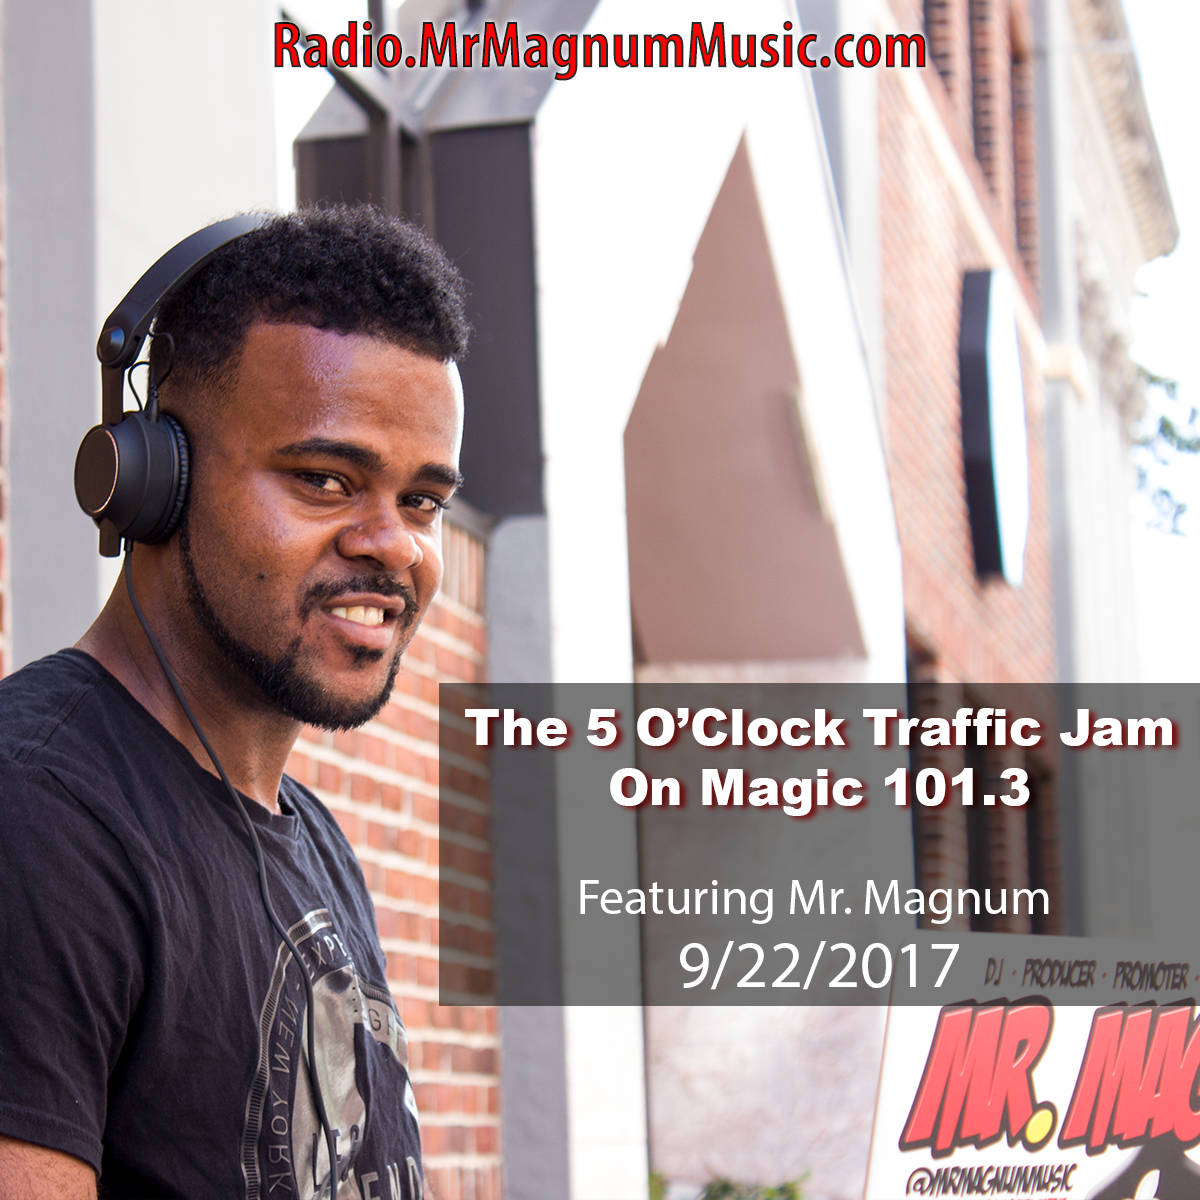 The 5 O'Clock Traffic Jam 20170922 featuring Gainesville's #1 DJ, Mr. Magnum on Magic 101.3